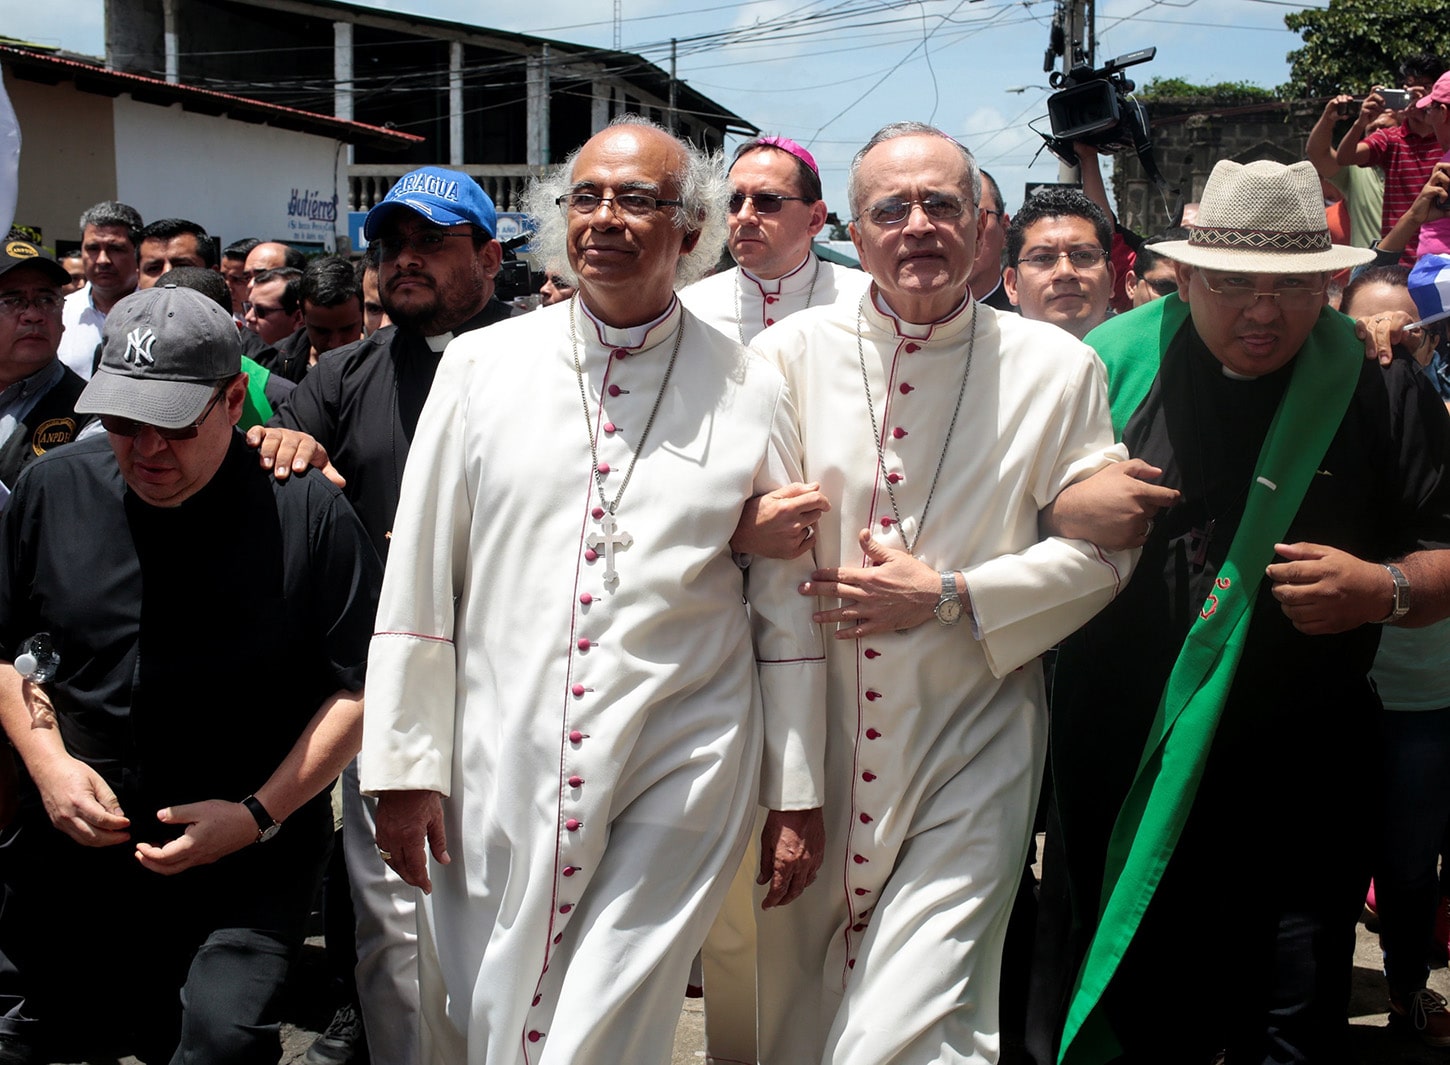 Nicaragua priest arrests